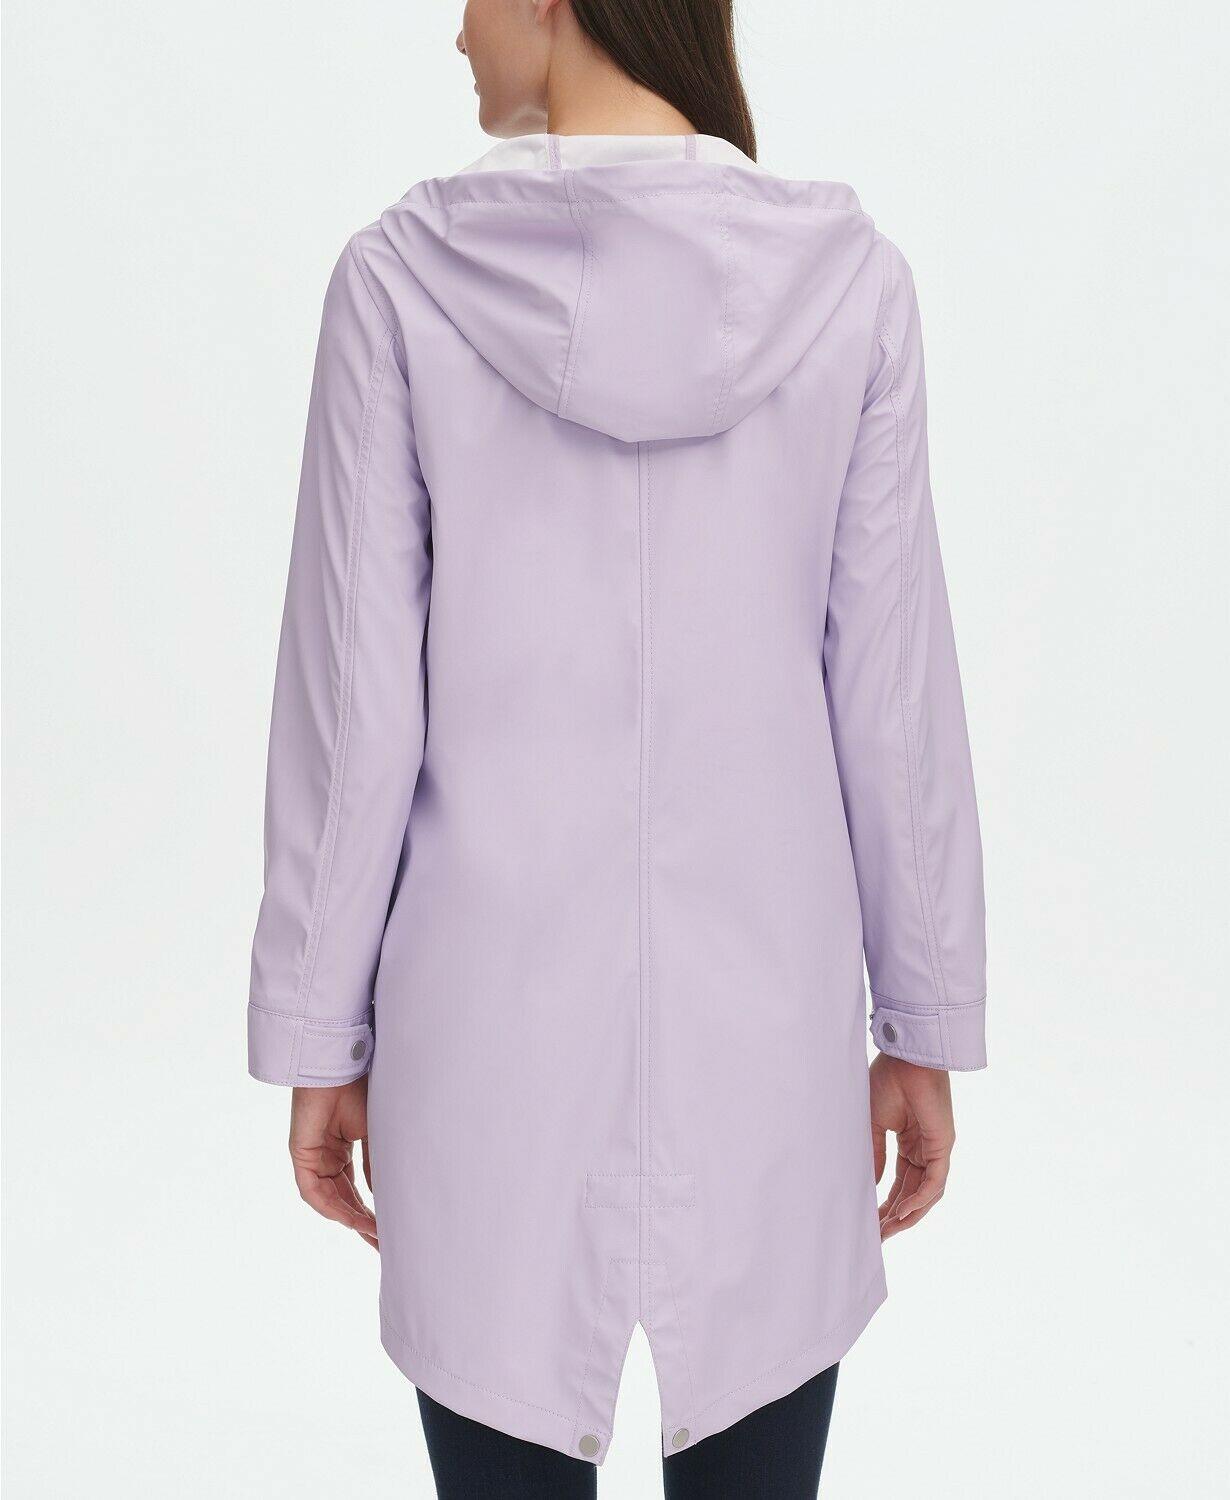 Levi's Womens Long Hooded Slicker Rain Jacket Raincoat Polyurethane Lavender S - SVNYFancy